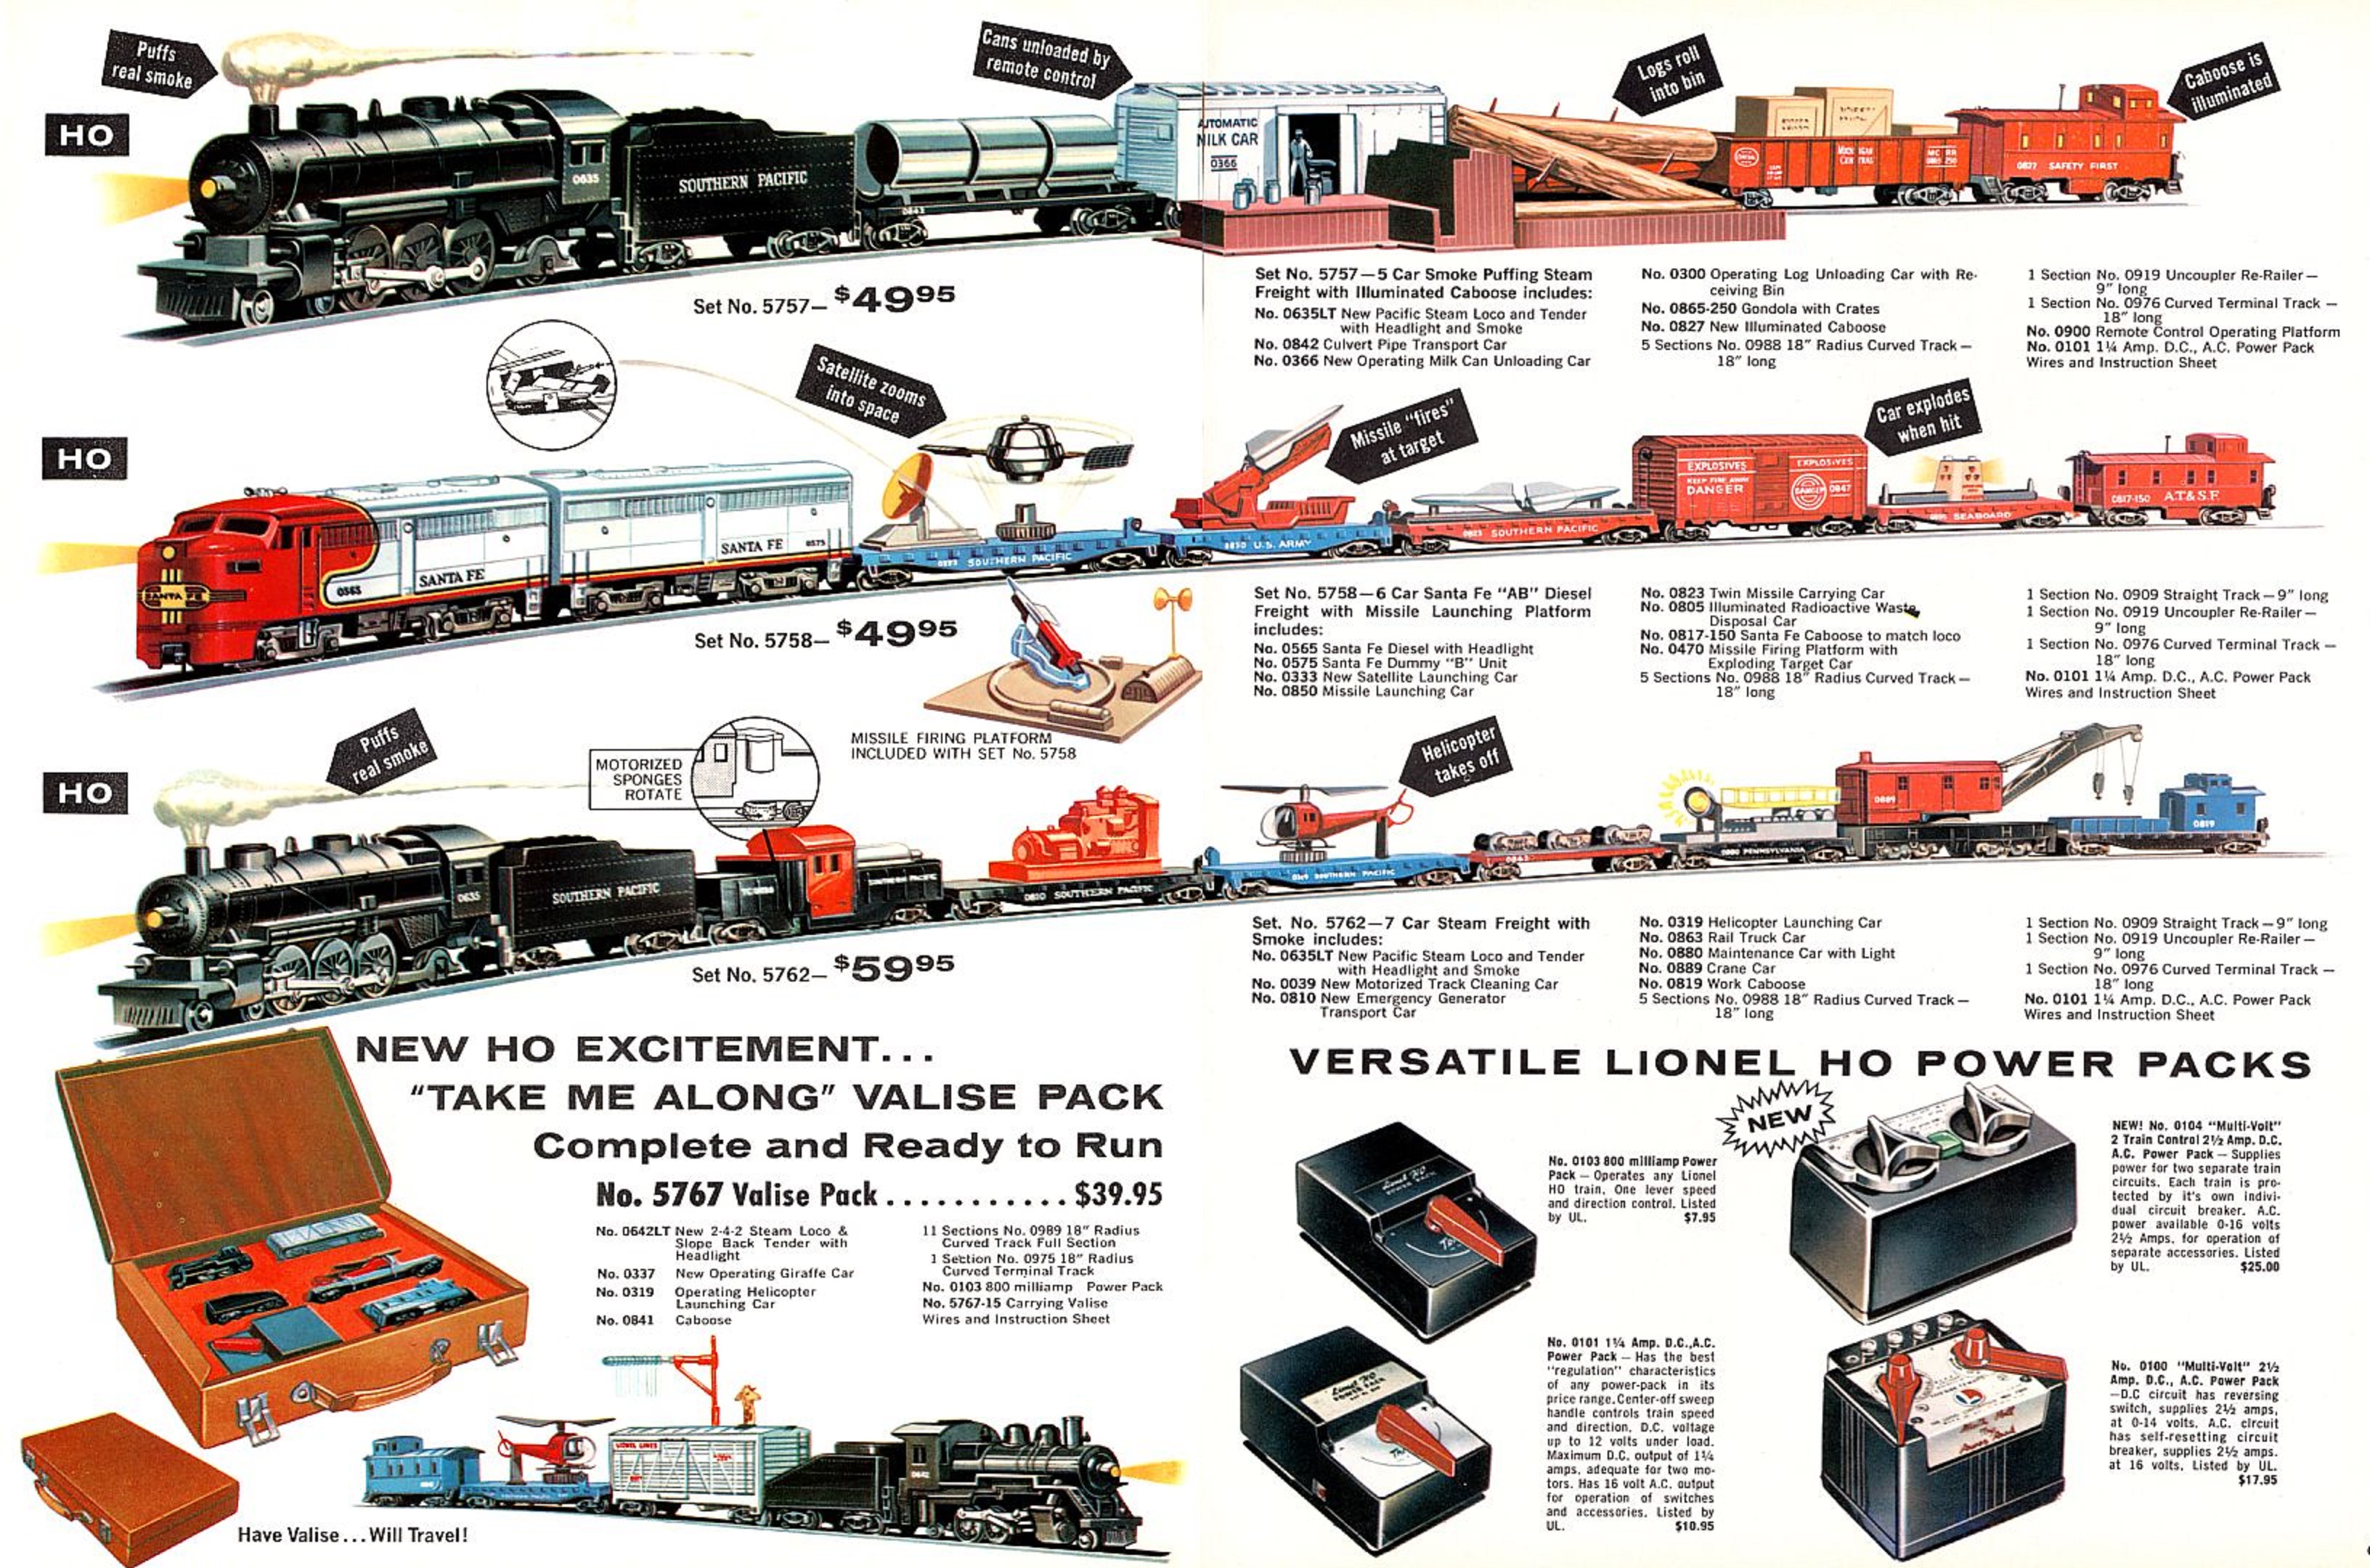 Lionel HO Power Pack 0103 Model Train Hobby Transformer for sale online 